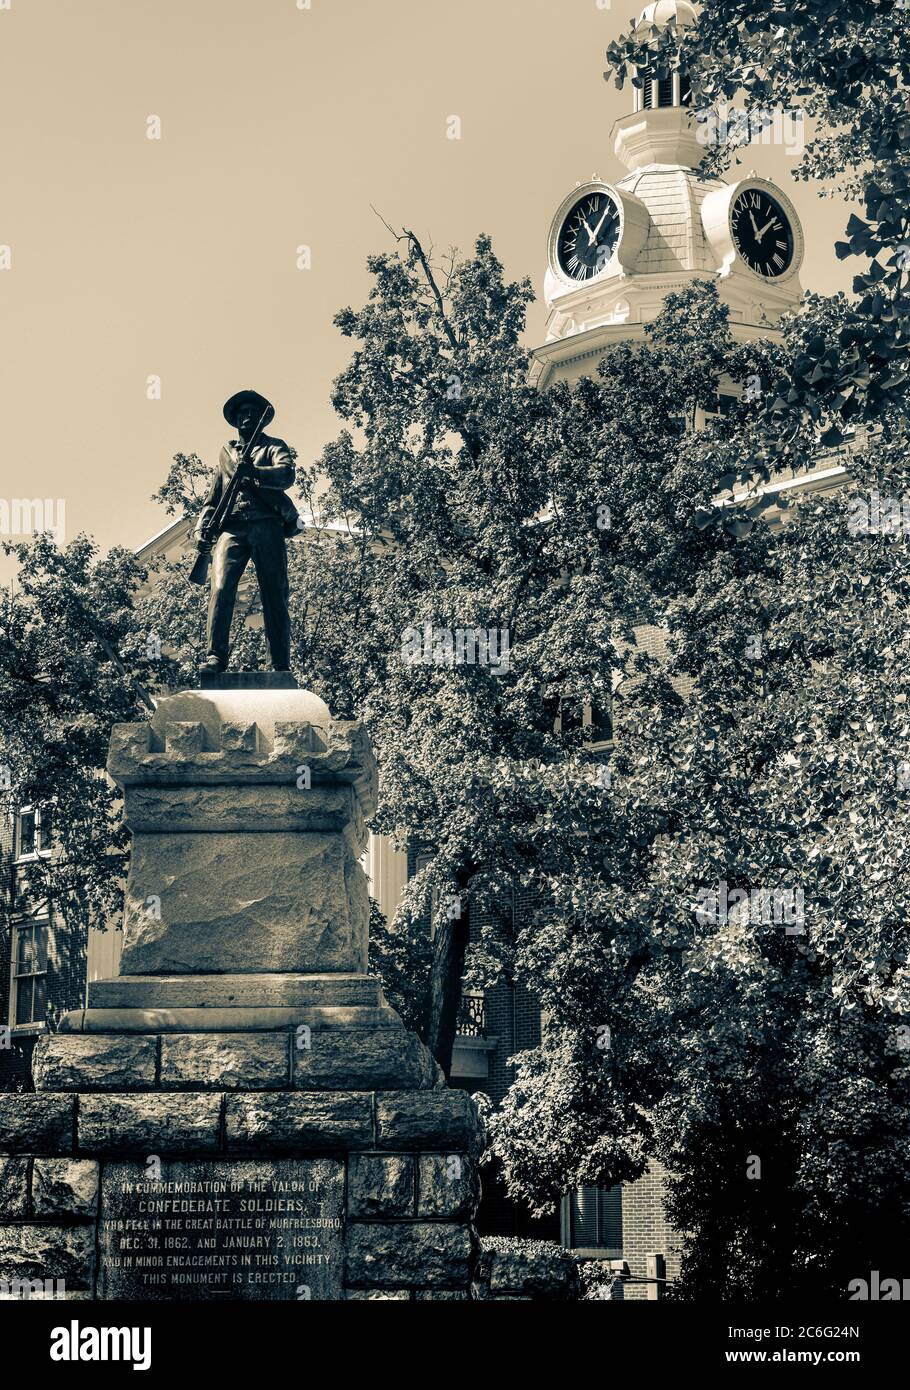 A commemorative Confederate Solider Statue on plinth with plaque dedication to fallen confederate soldiers in the Civil War, Murfreesboro, TN, USA, Stock Photo